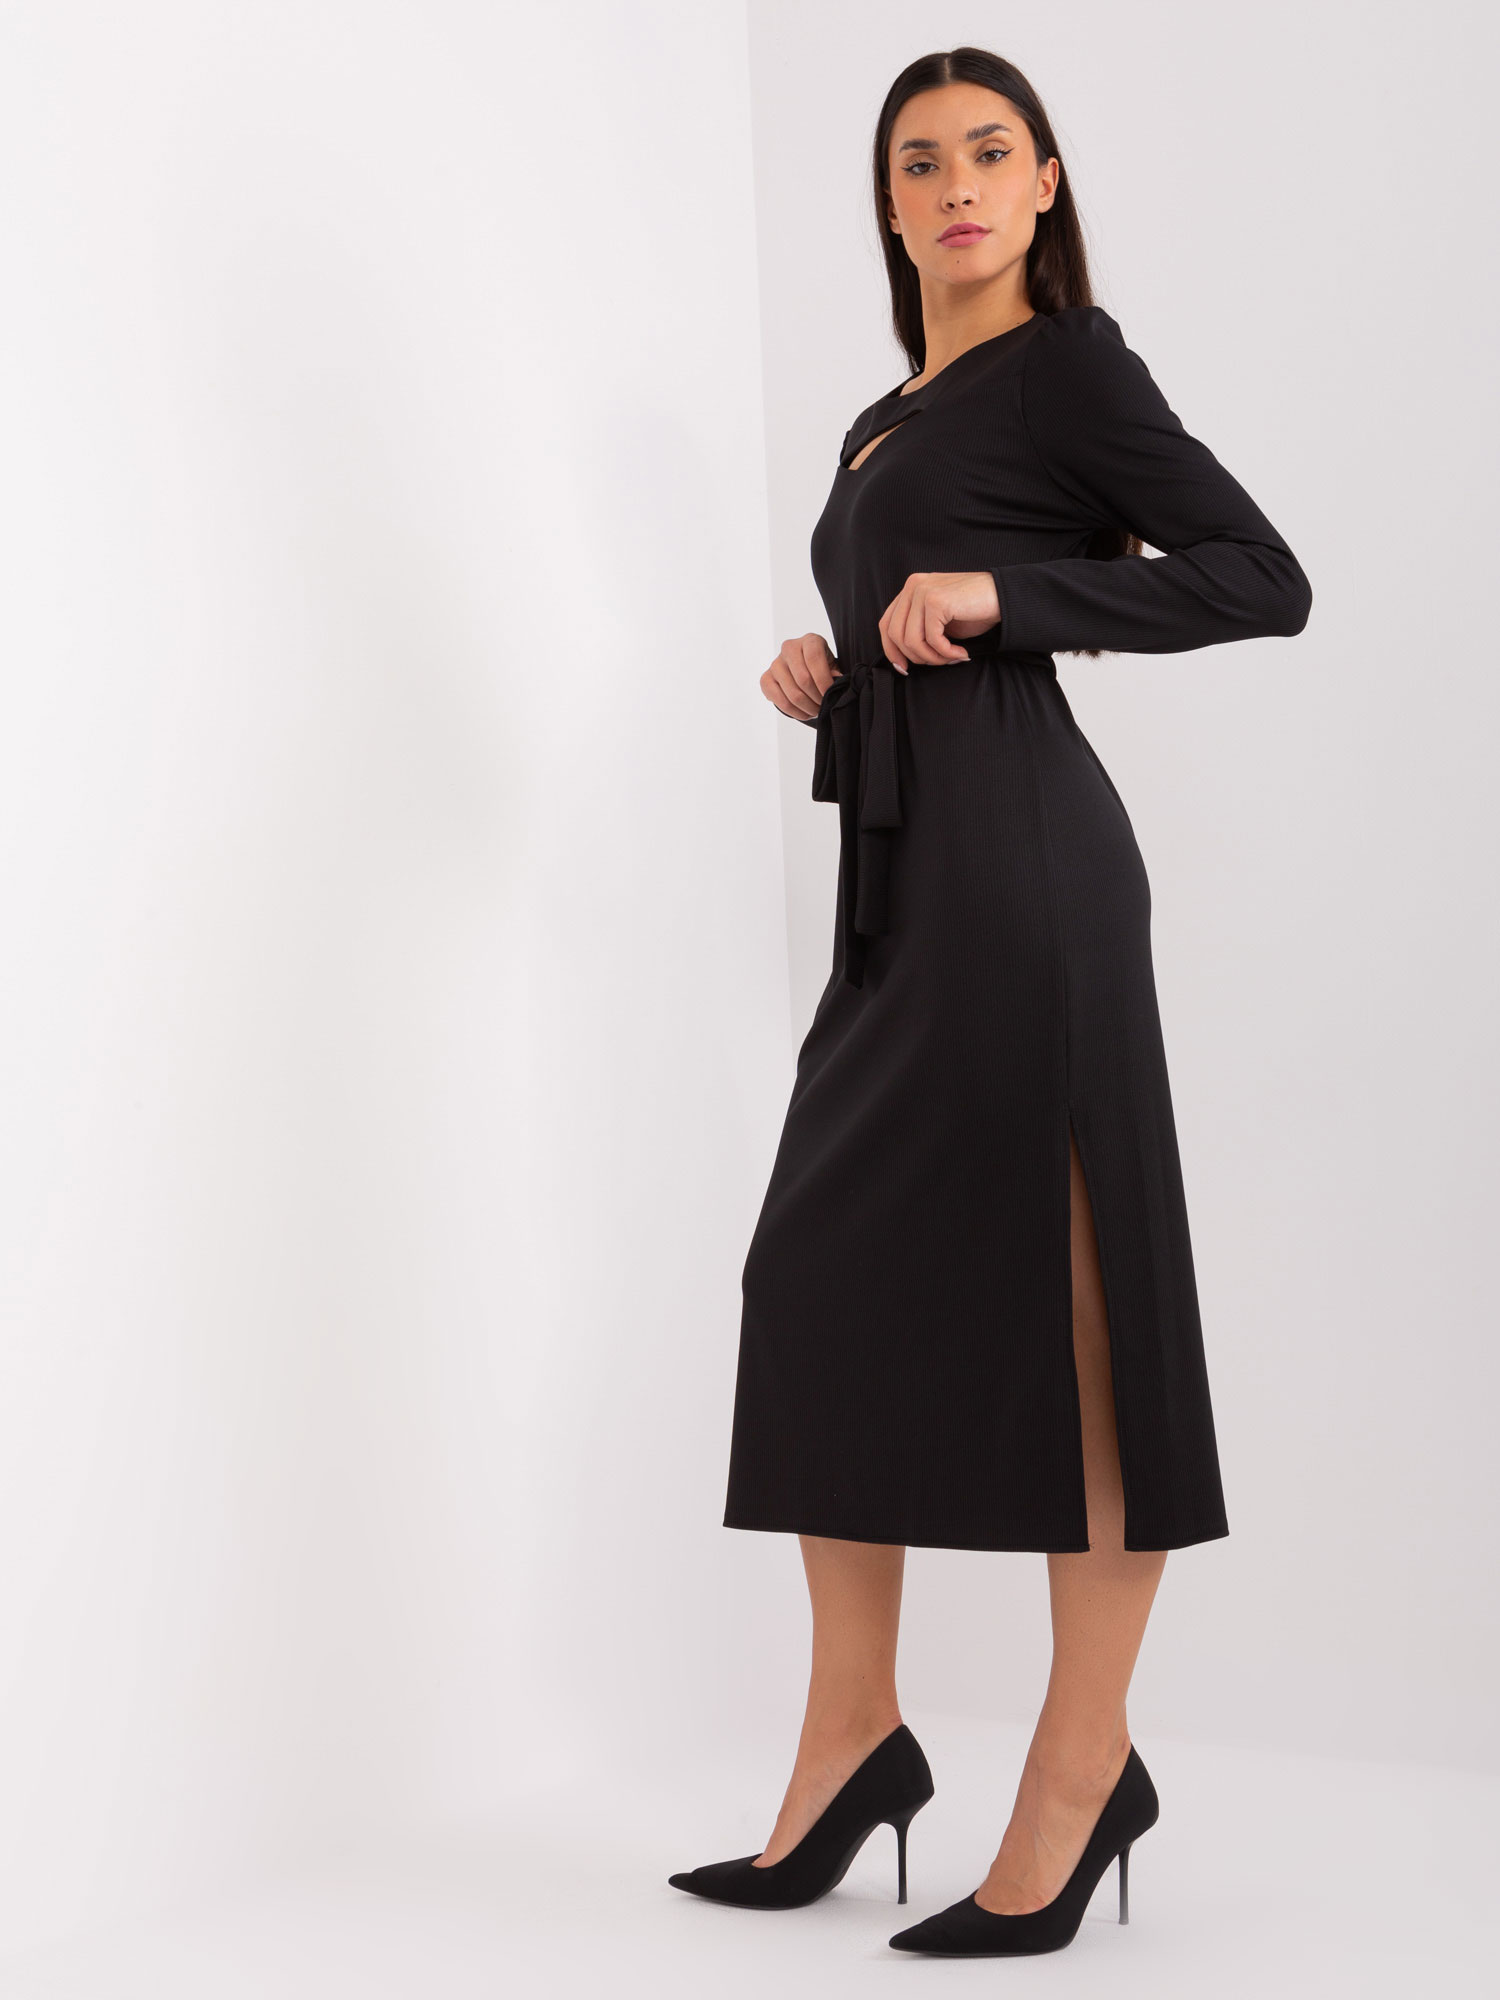 Black cocktail dress with slits